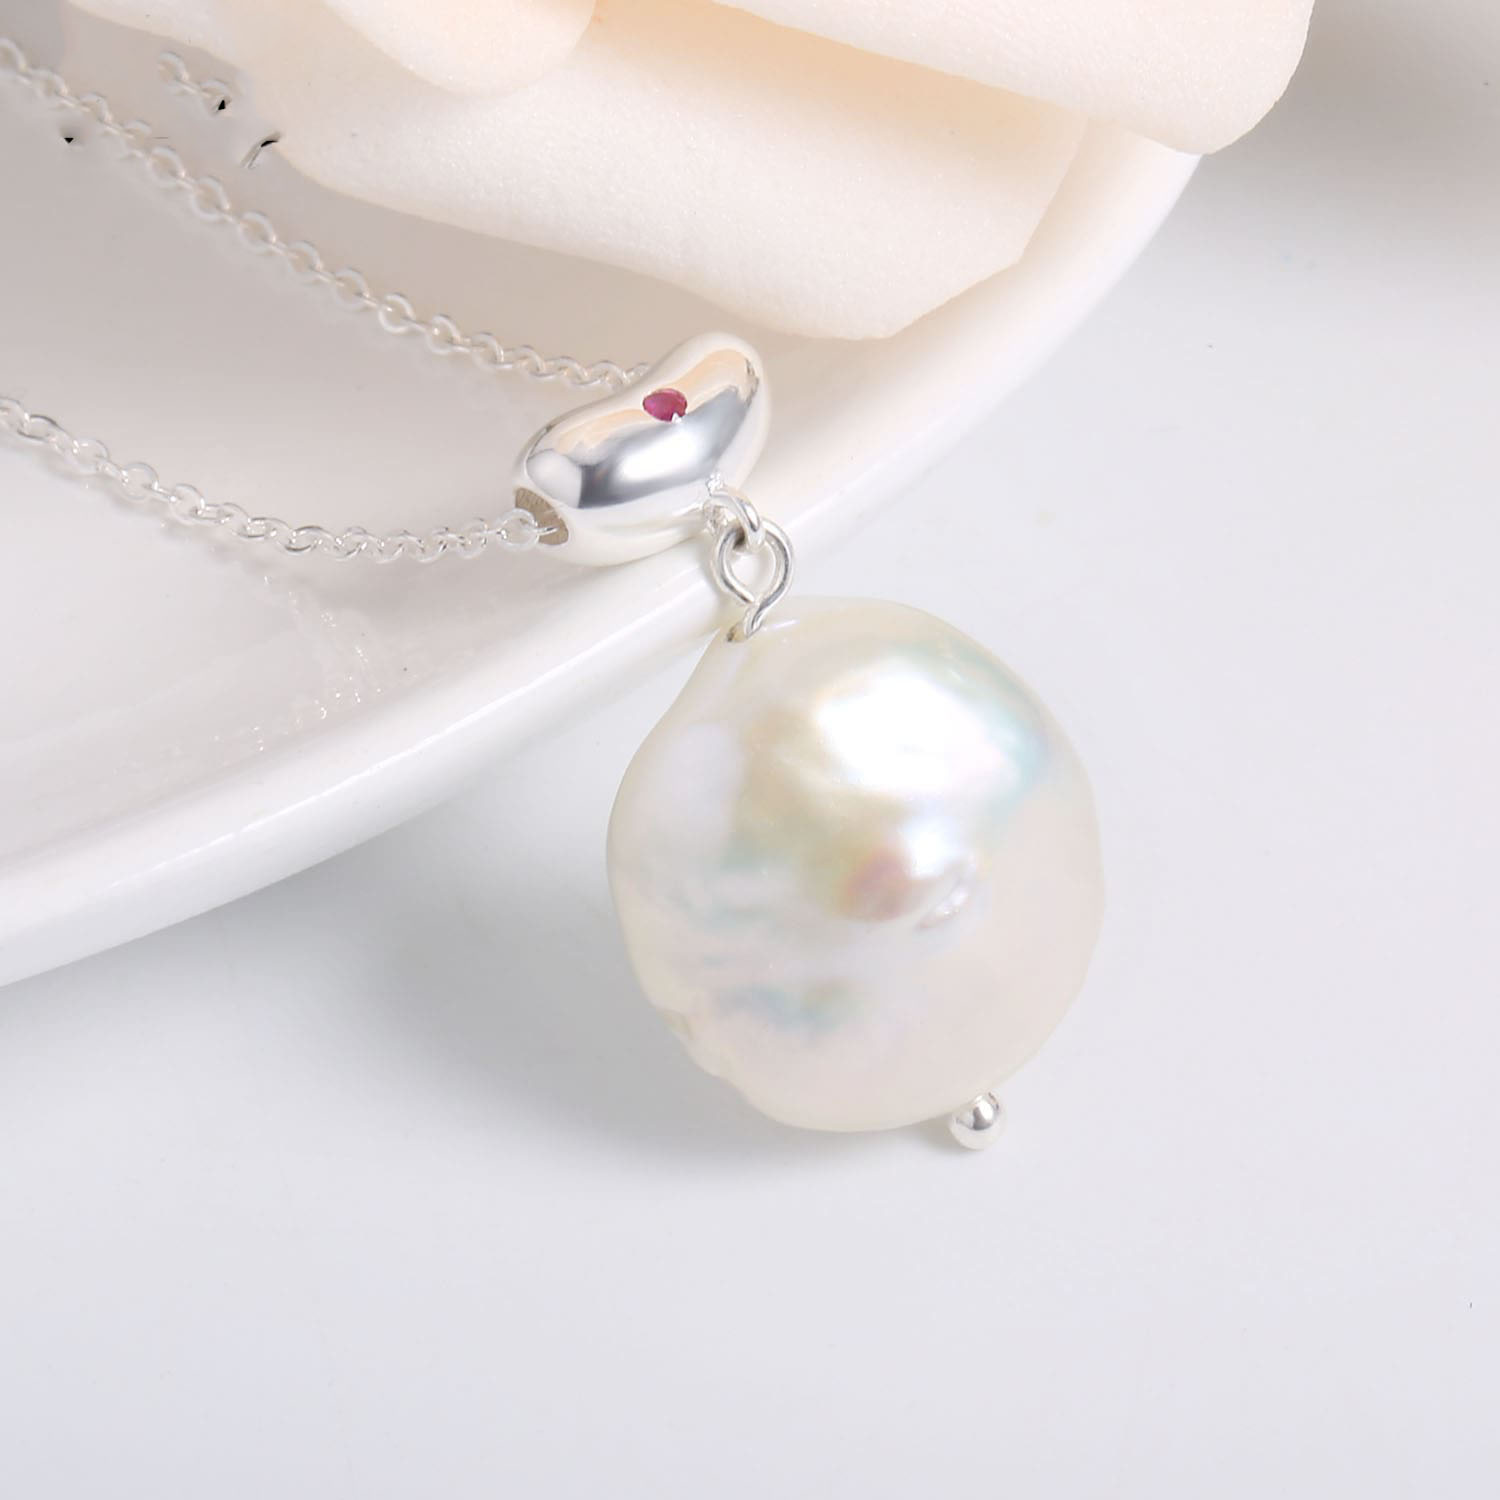 Silver Baroque Pearl Necklace with Zircon Stone